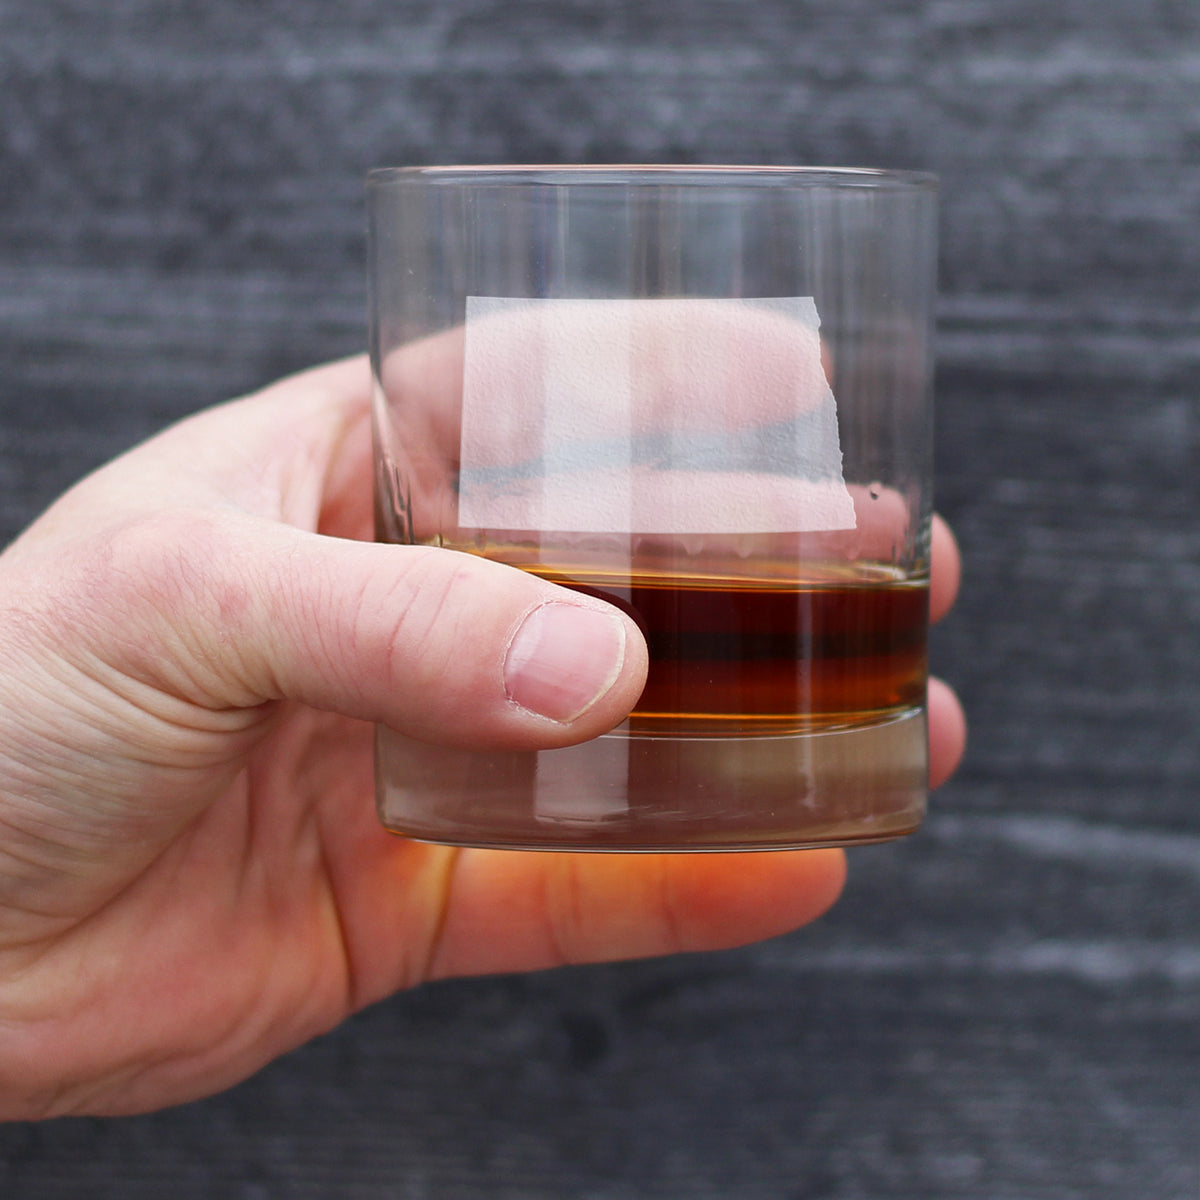 North Dakota State Outline Whiskey Rocks Glass - State Themed Drinking Decor and Gifts for North Dakotan Women &amp; Men - 10.25 Oz Whisky Tumbler Glasses